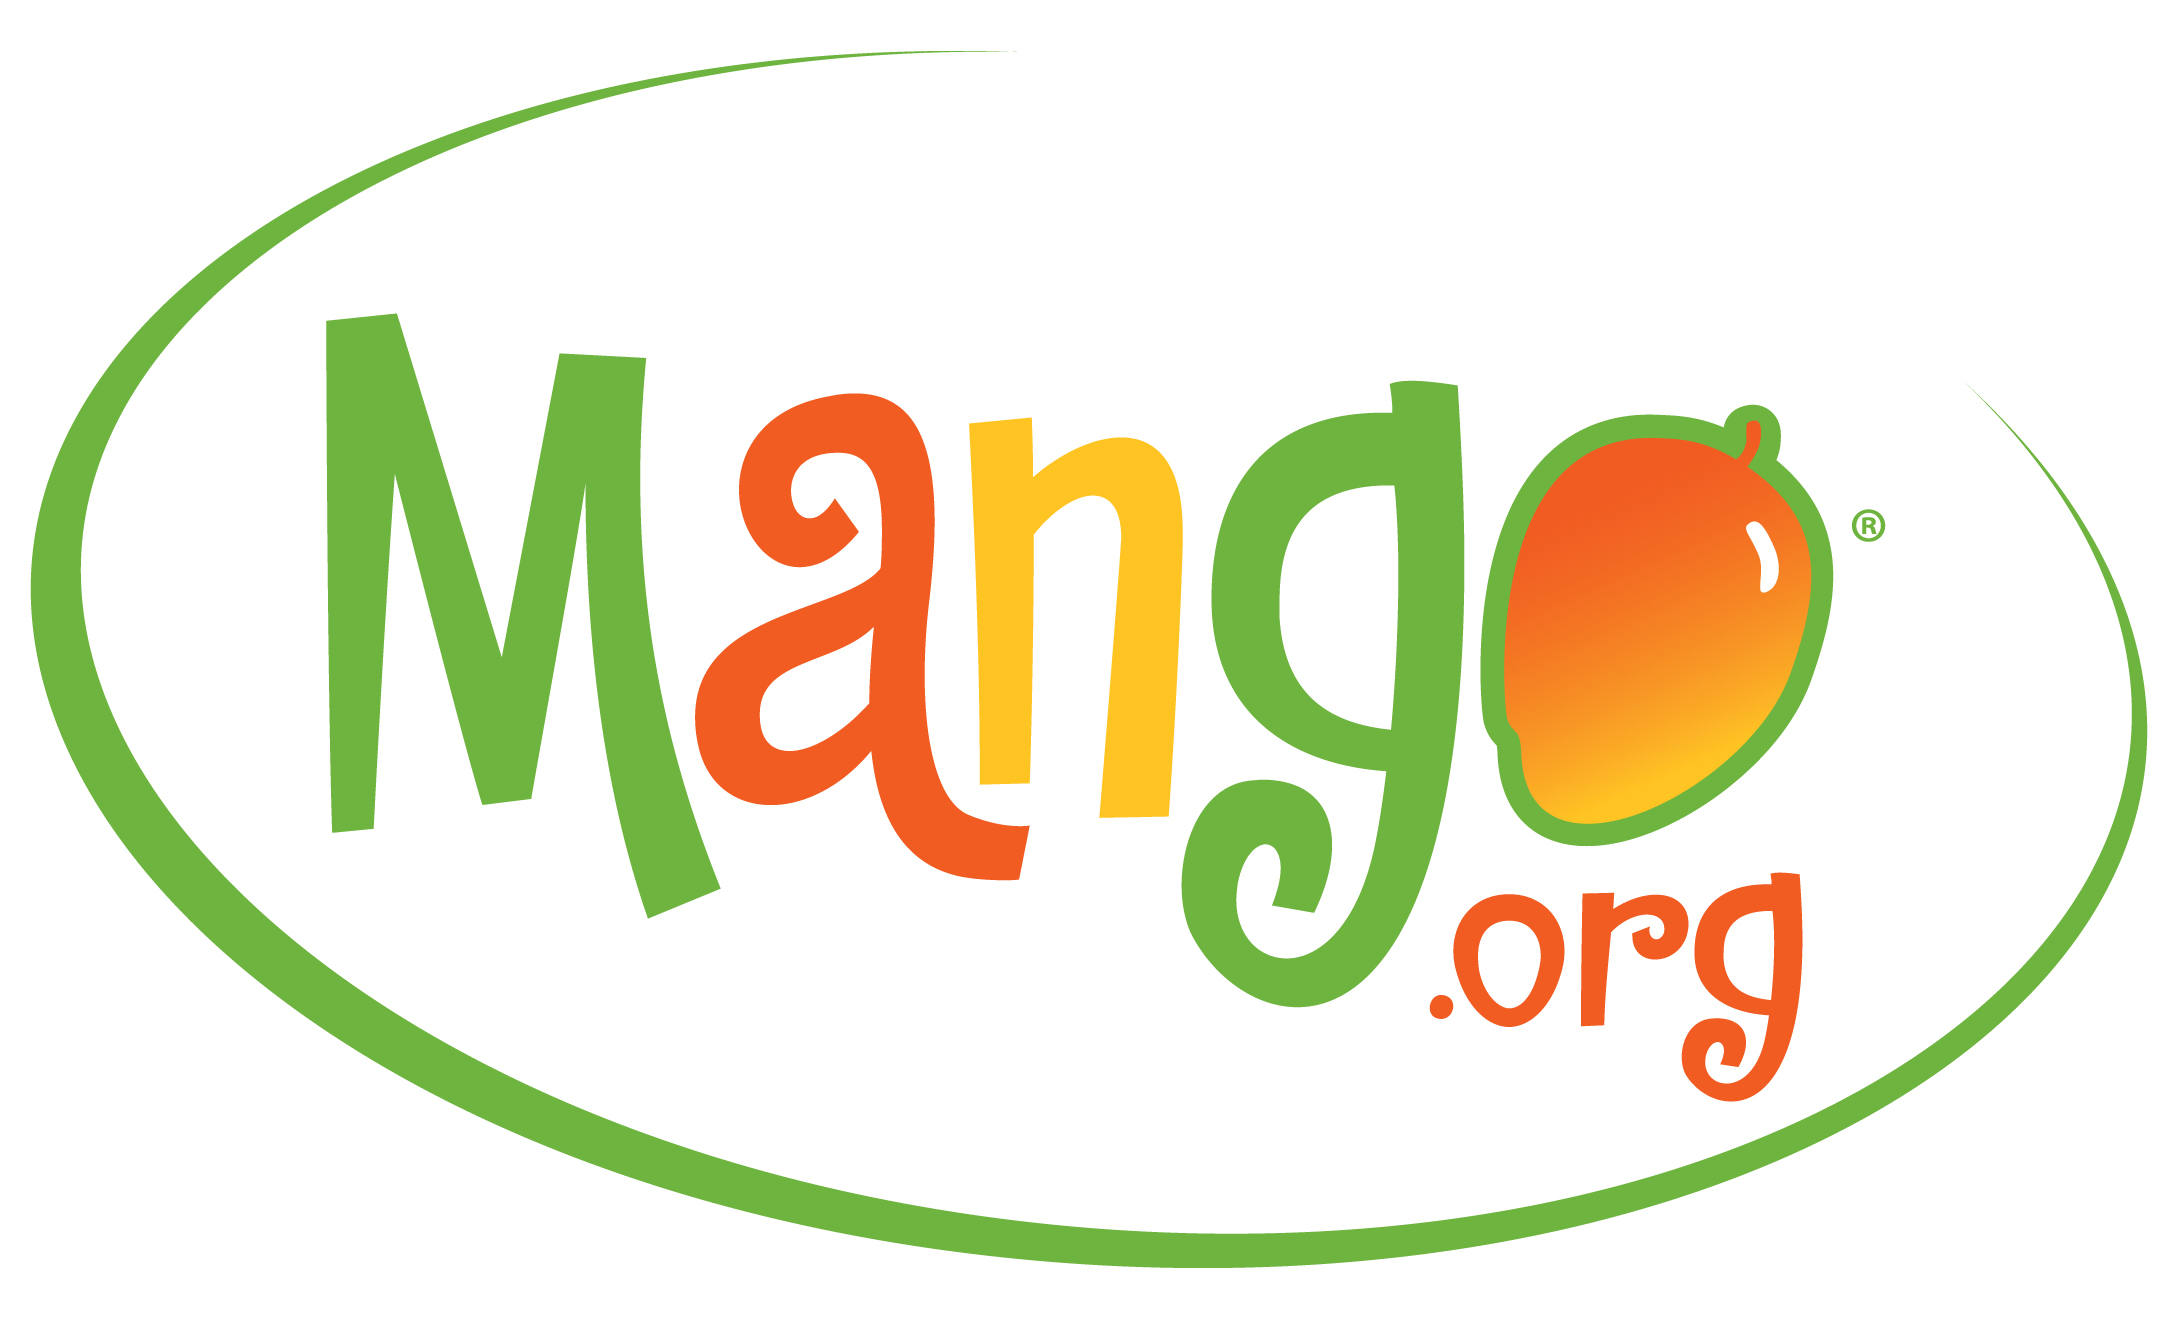 National Mango Board